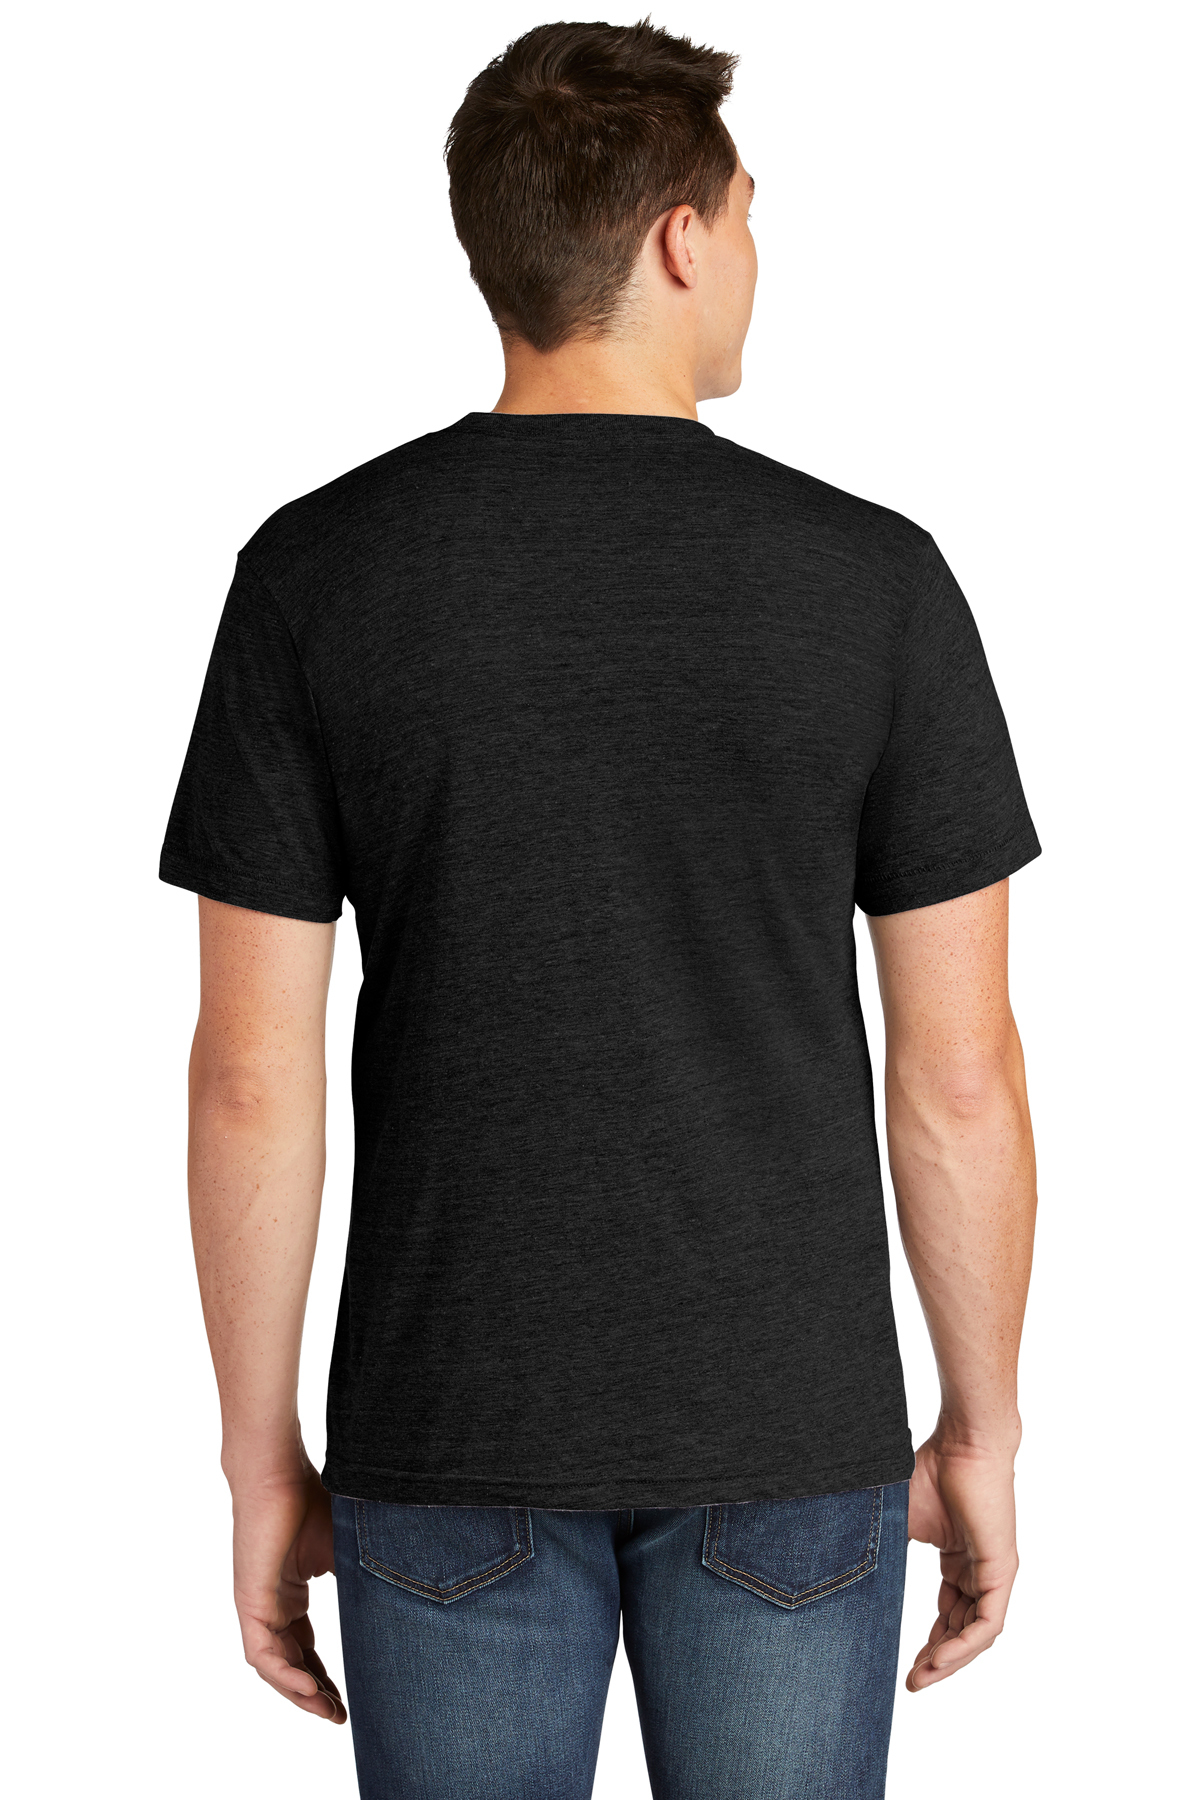 American Apparel Tri-Blend Unisex Track T-Shirt | Product | SanMar